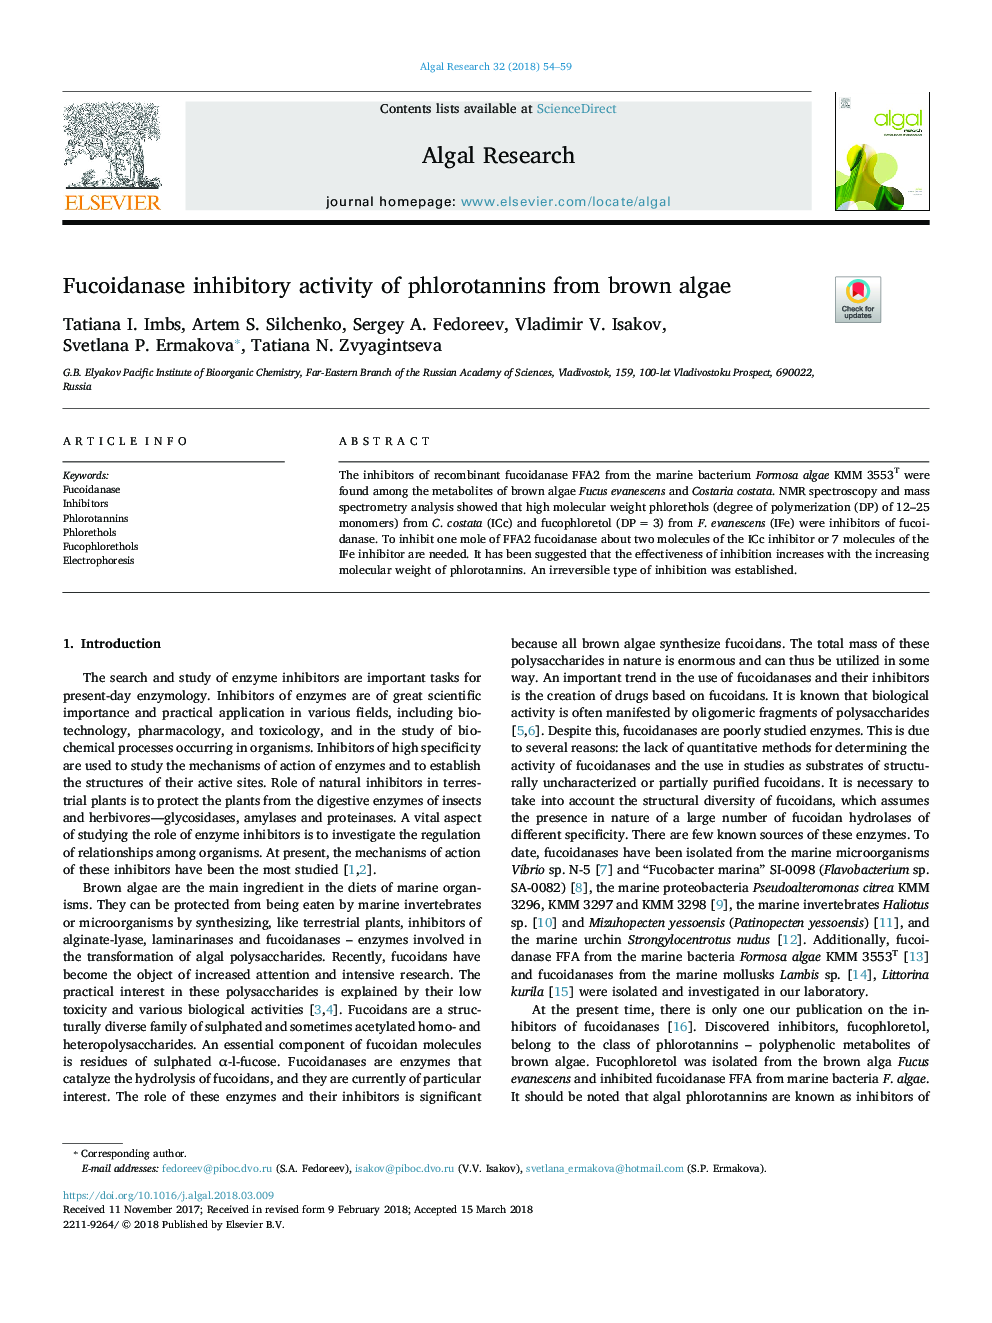 Fucoidanase inhibitory activity of phlorotannins from brown algae